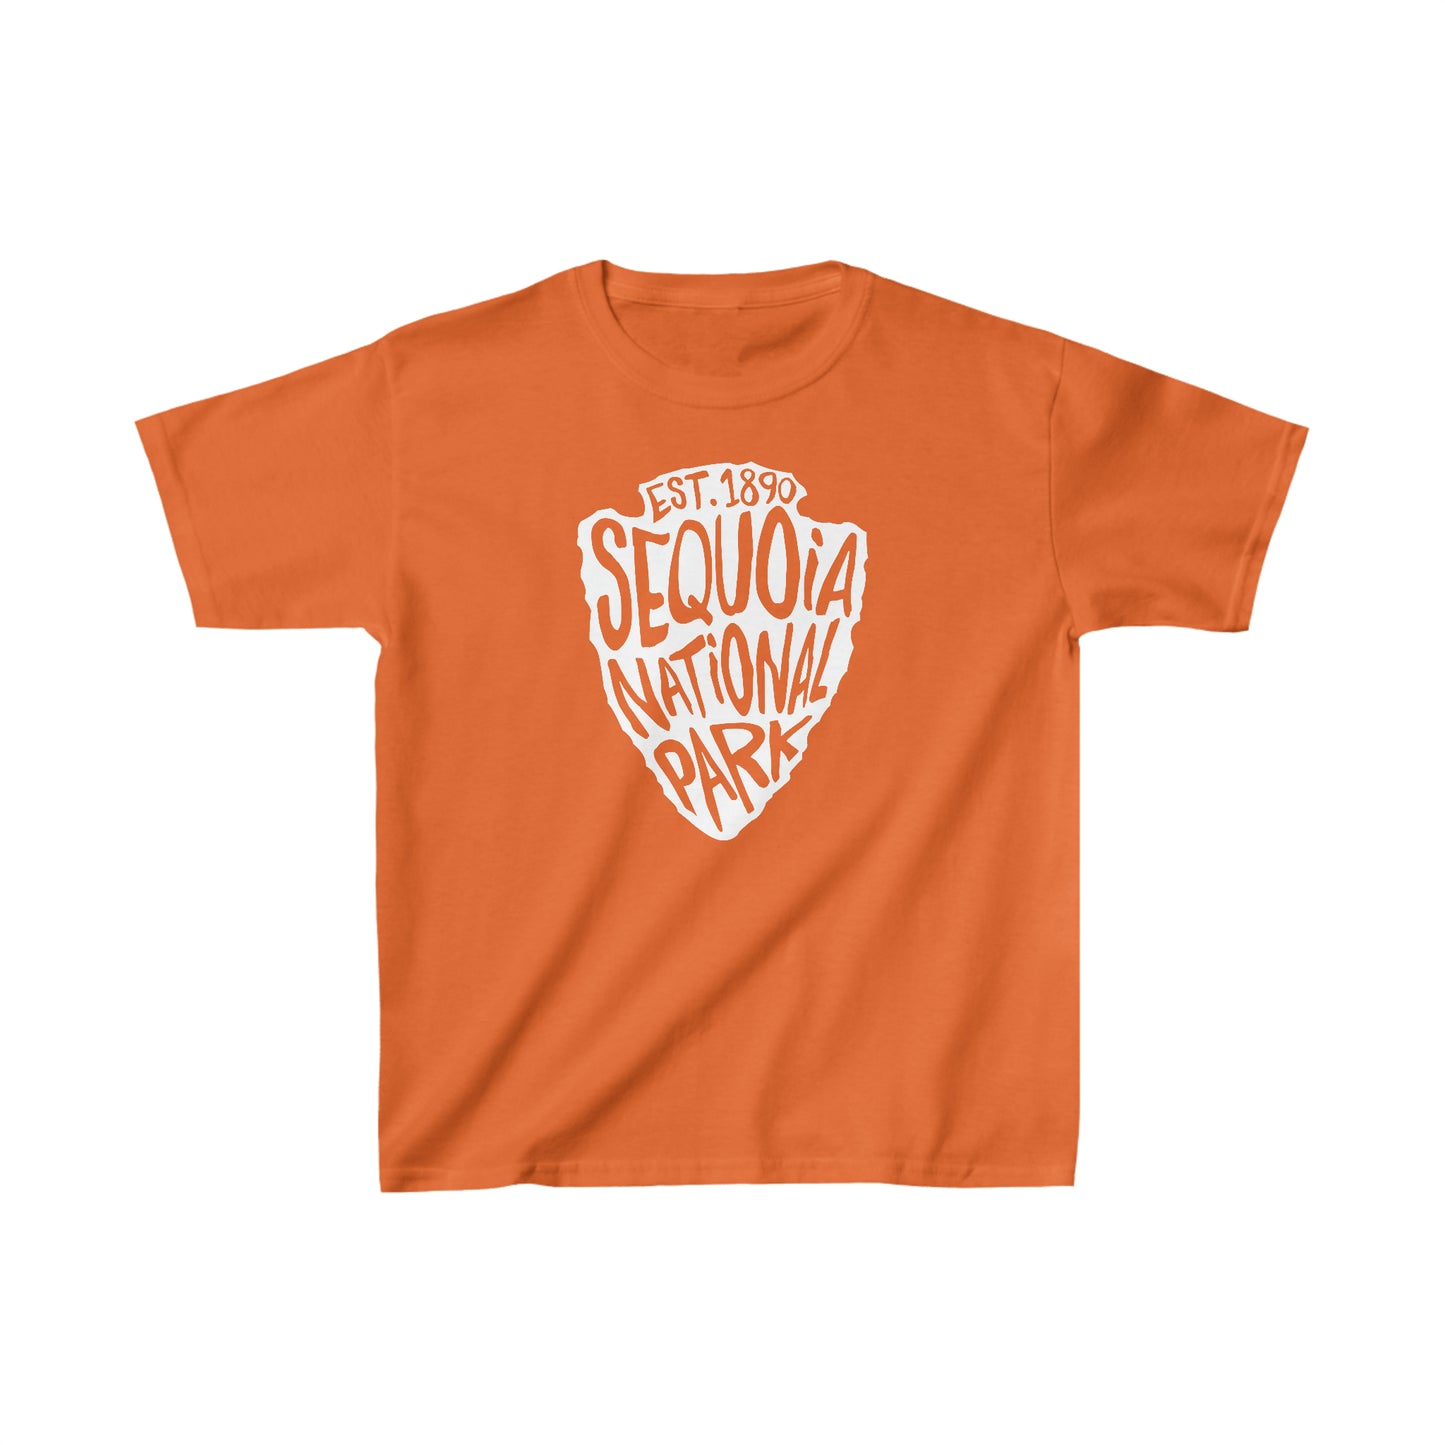 Sequoia National Park Child T-Shirt - Arrowhead Design